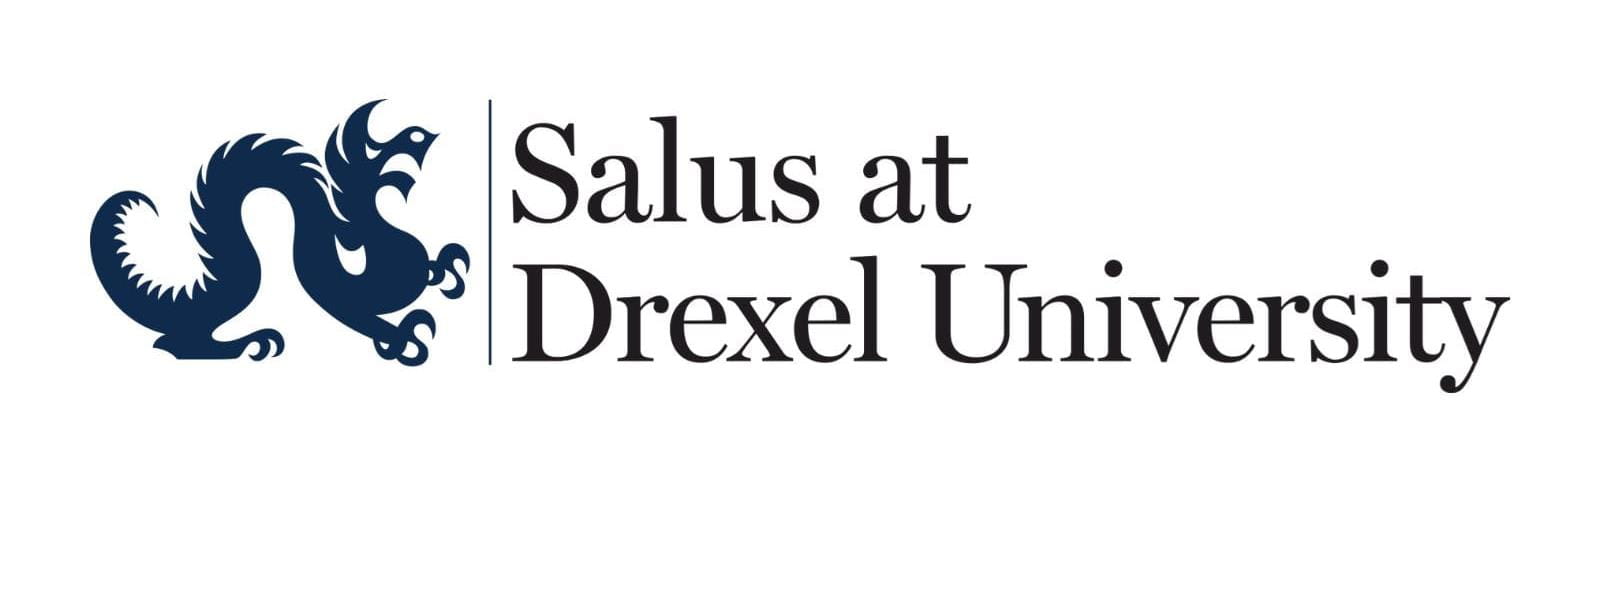 SALUS AT DREXEL UNIVERSITY